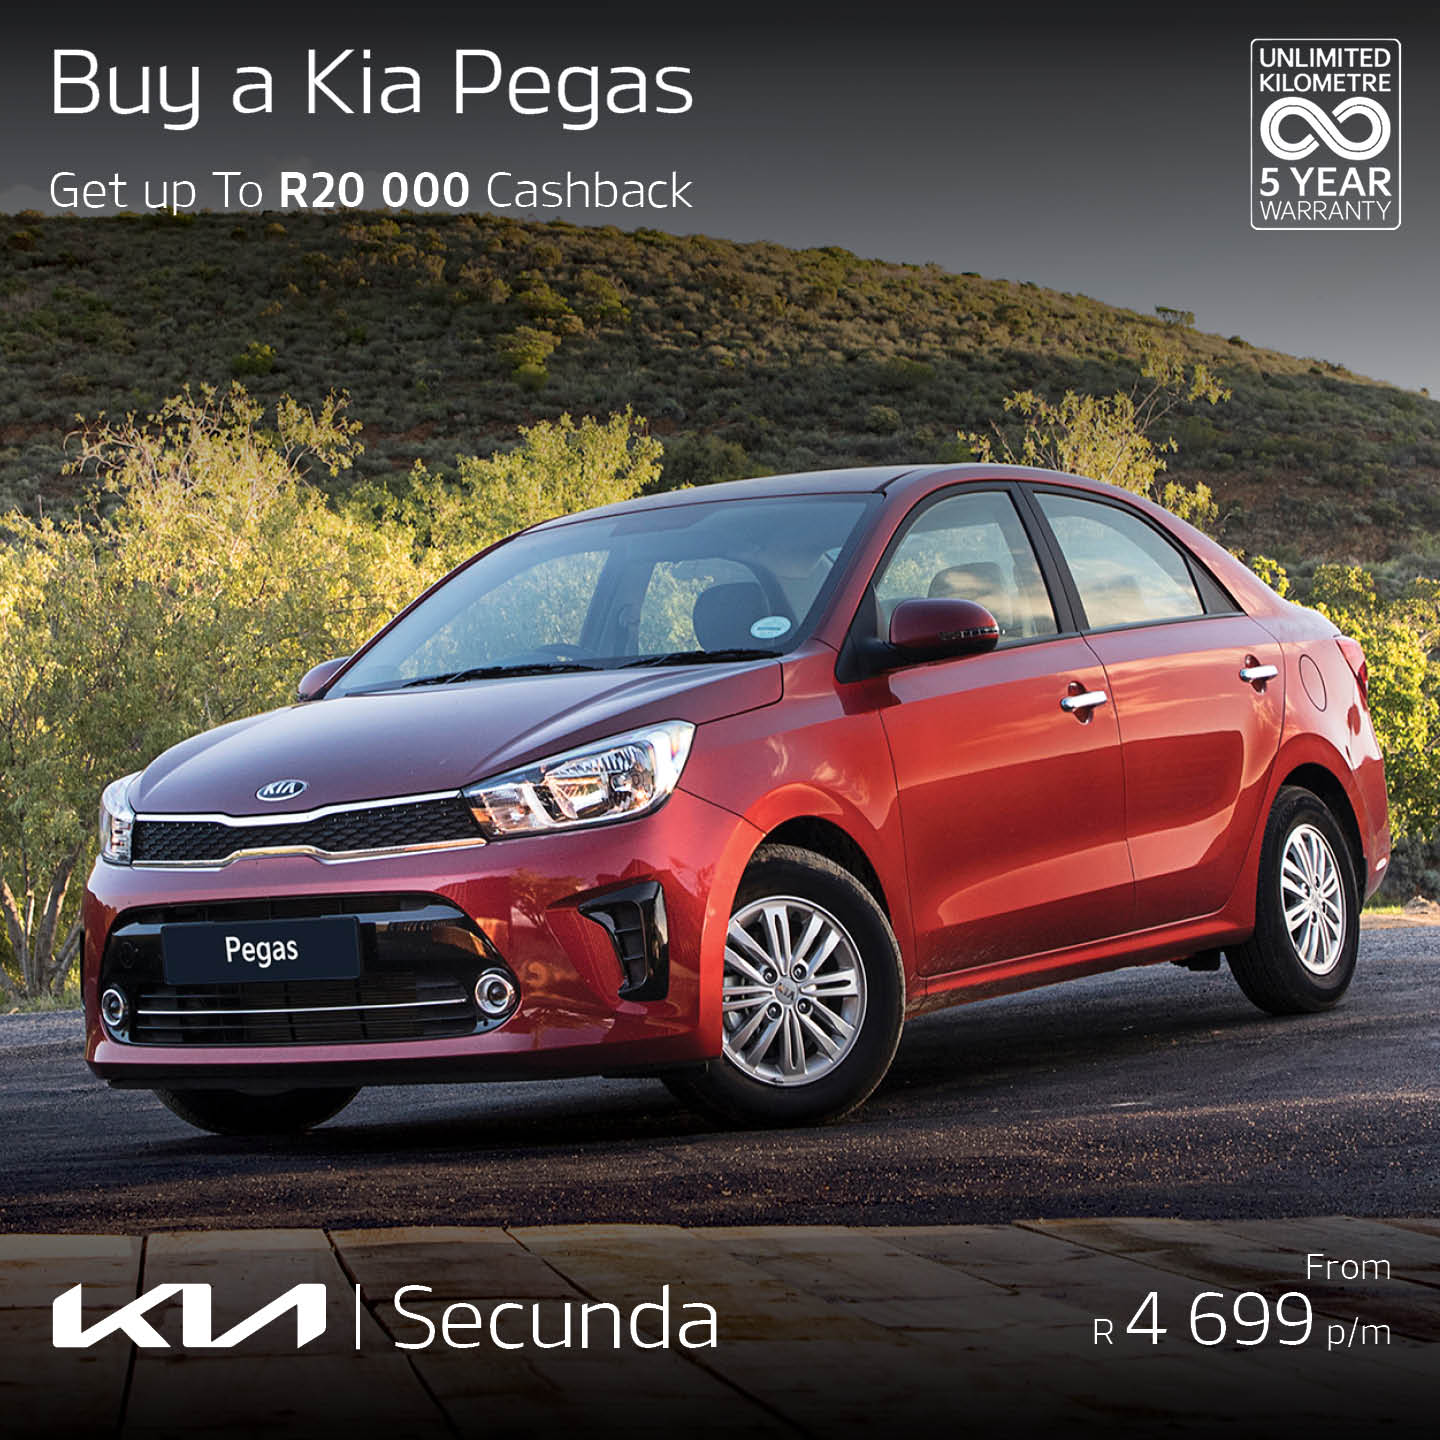 Buy a KIA Pegas image from Eastvaal Motors